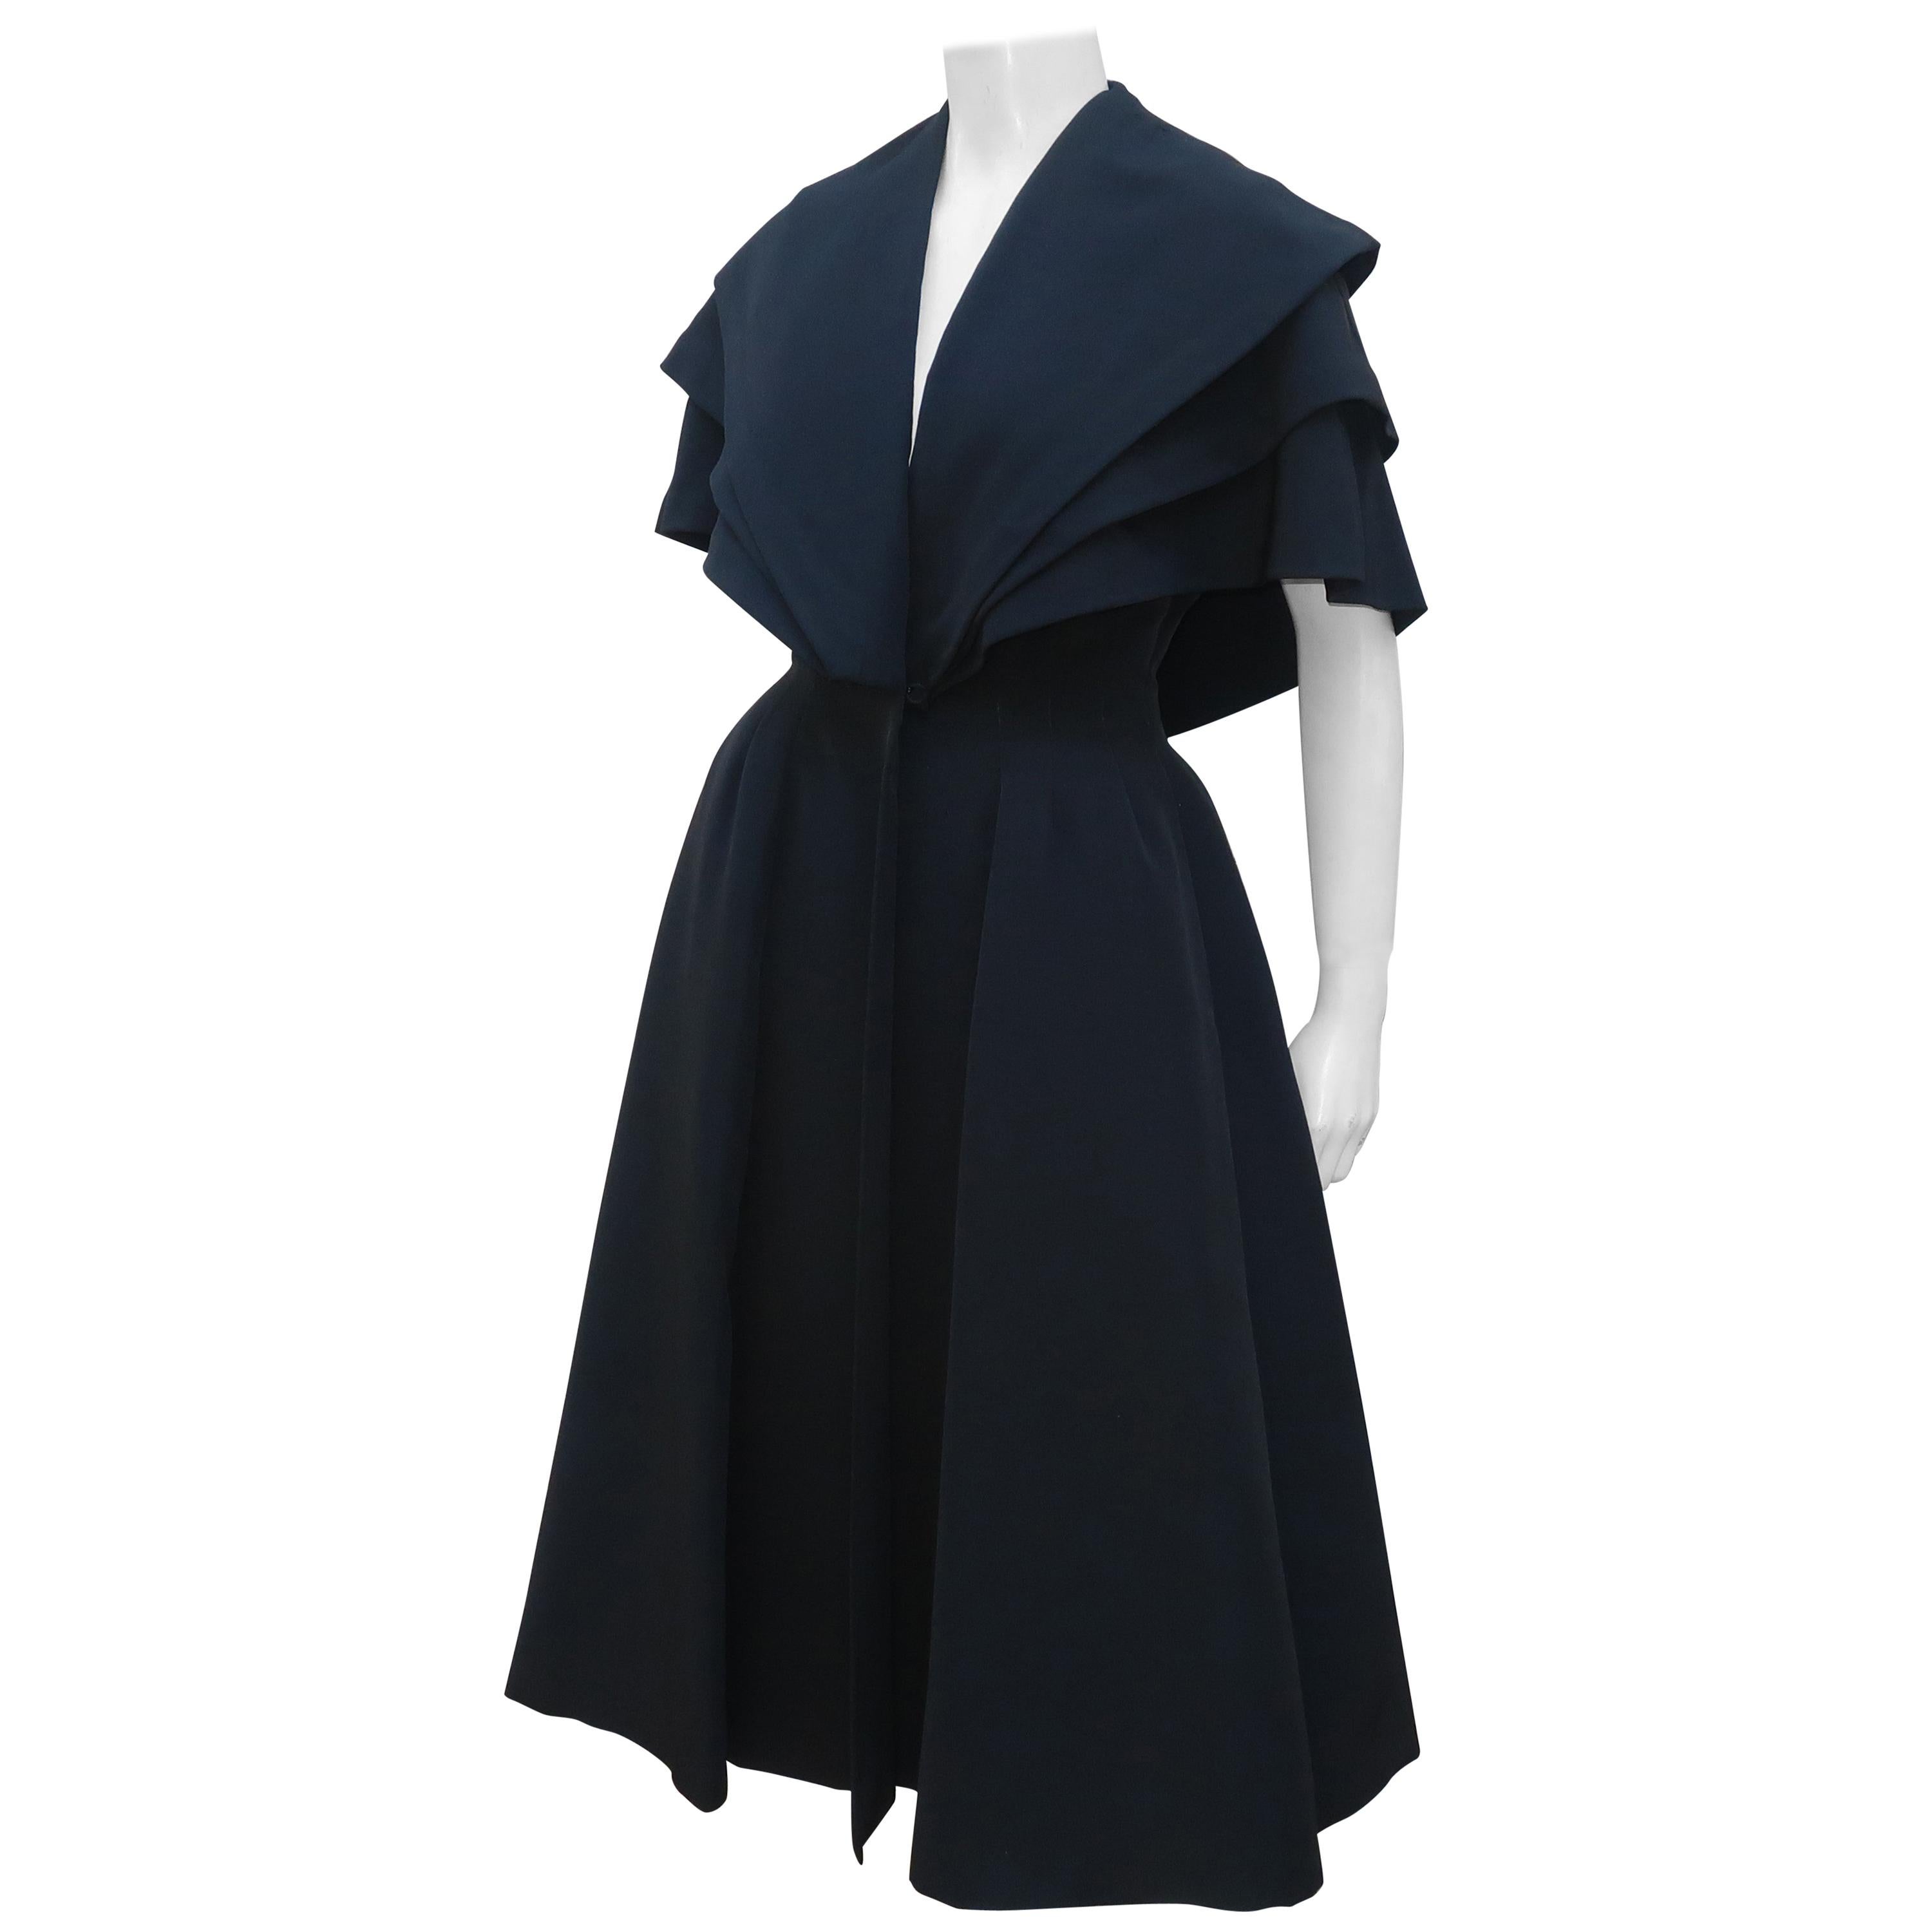 Bonwit Teller 'New Look' Black Silk Faille Evening Coat Dress, C.1950